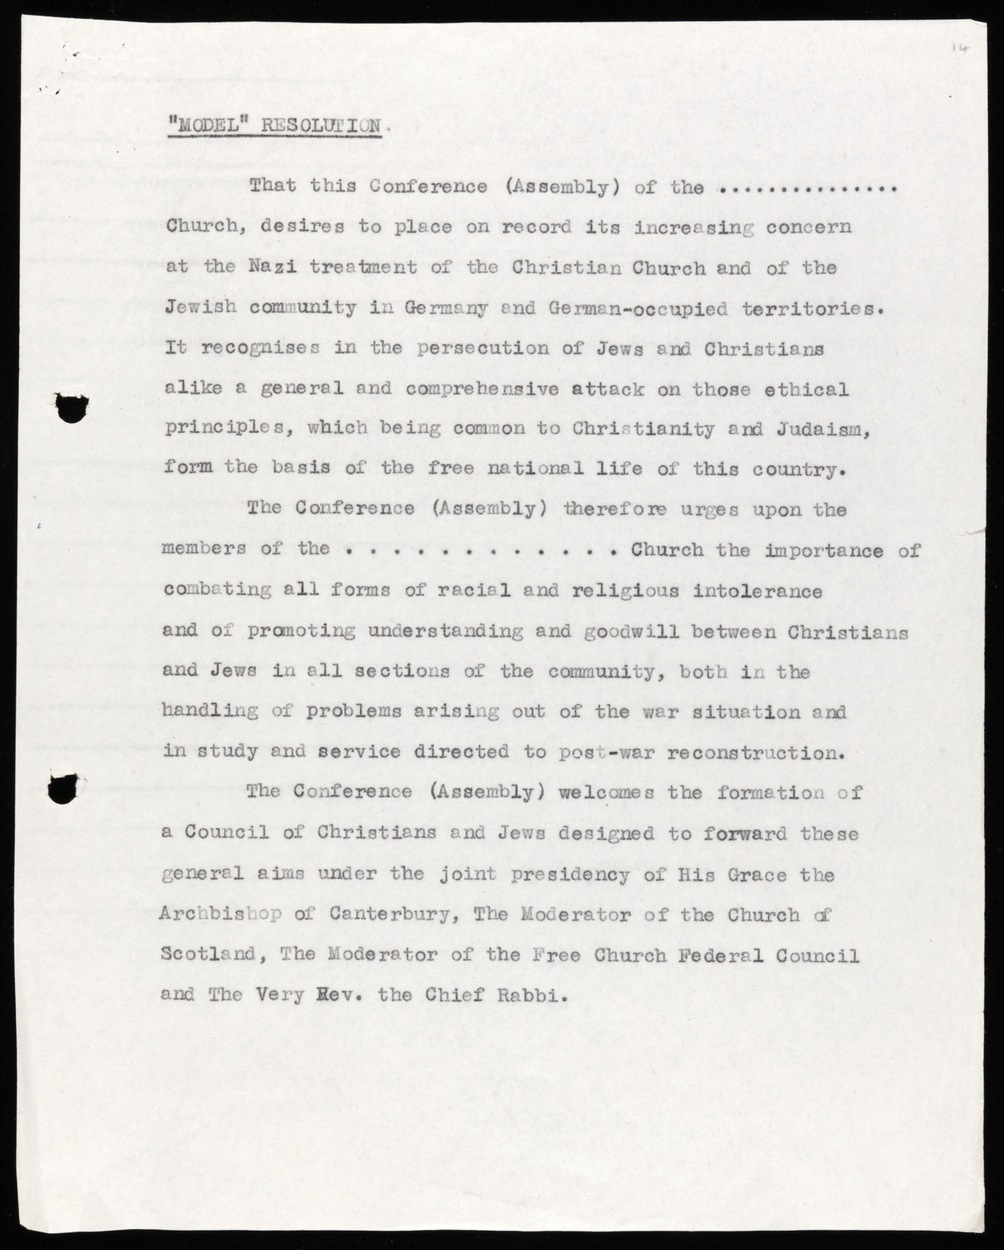 CCJ “Model” Resolution document, 1942 [MS65 A755/2/1/14]